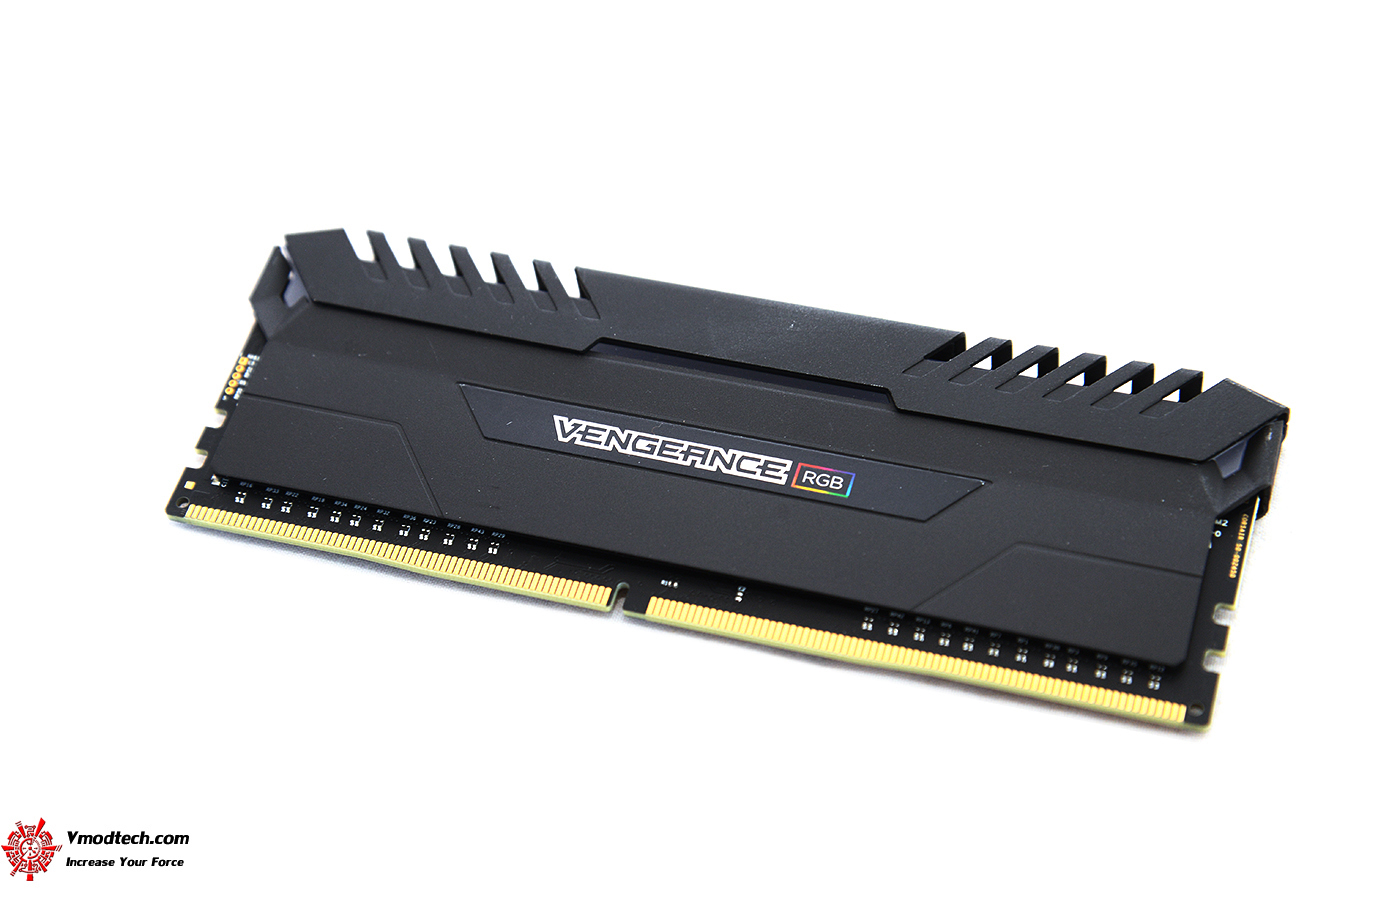 dsc 7309 CORSAIR VENGEANCE RGB 16GB (2 x 8GB) DDR4 DRAM 3000MHz C15 REVIEW